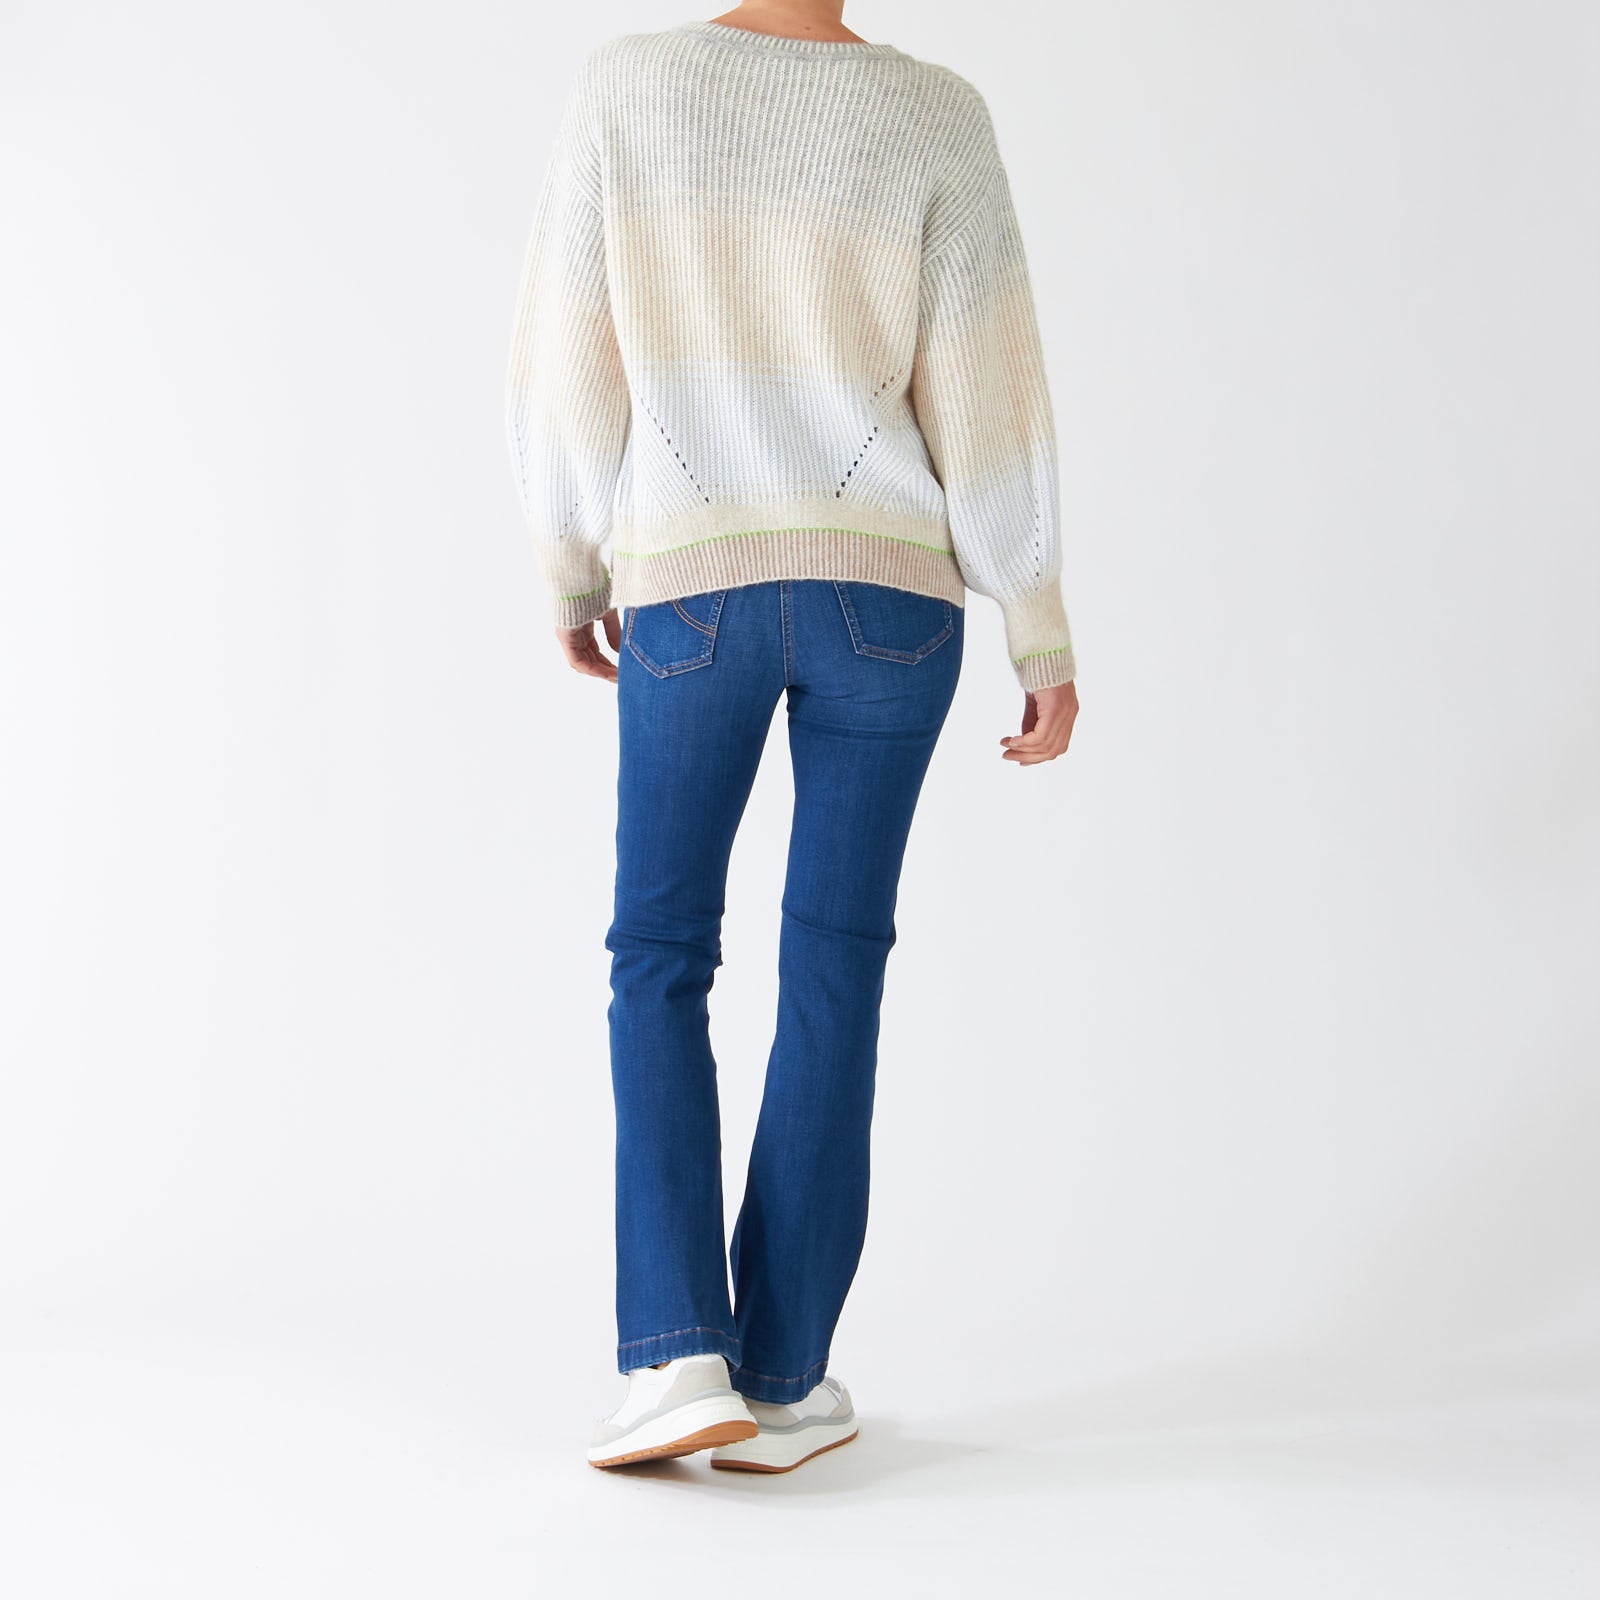 Soft Powder Blue Dégradé Cashmere Blend Sweater